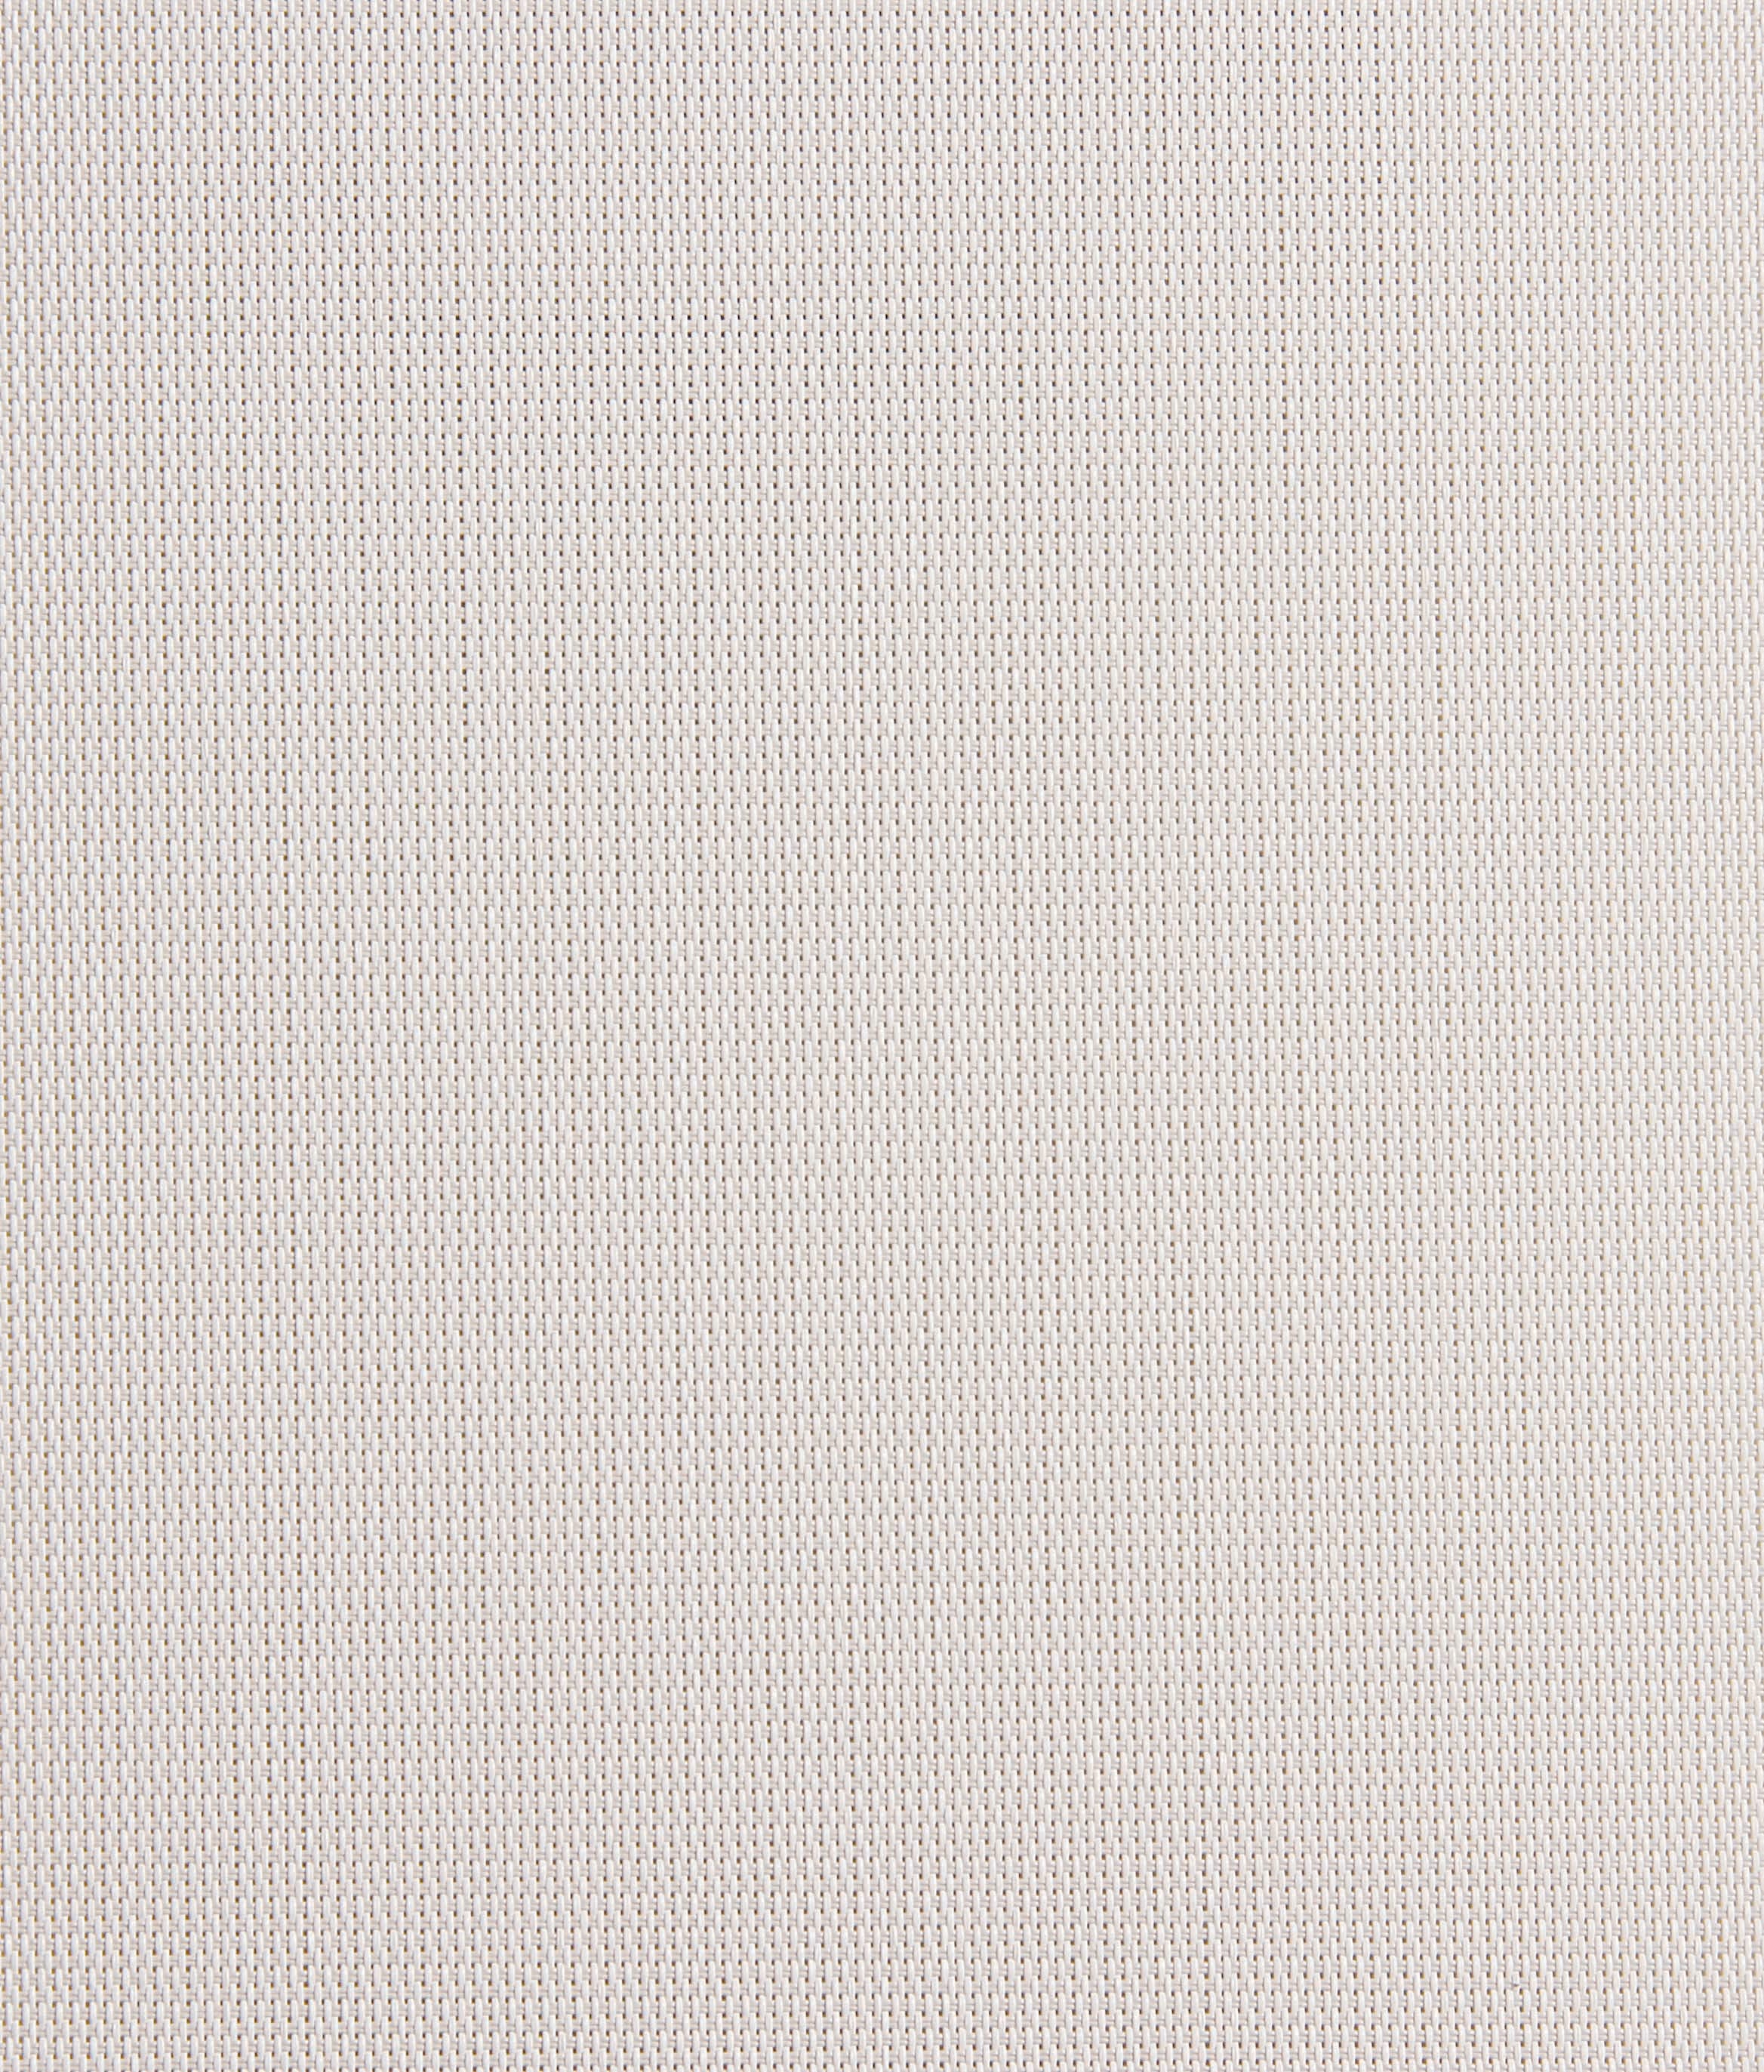 Sheerweave4300-Sandstone-Fabric.jpg